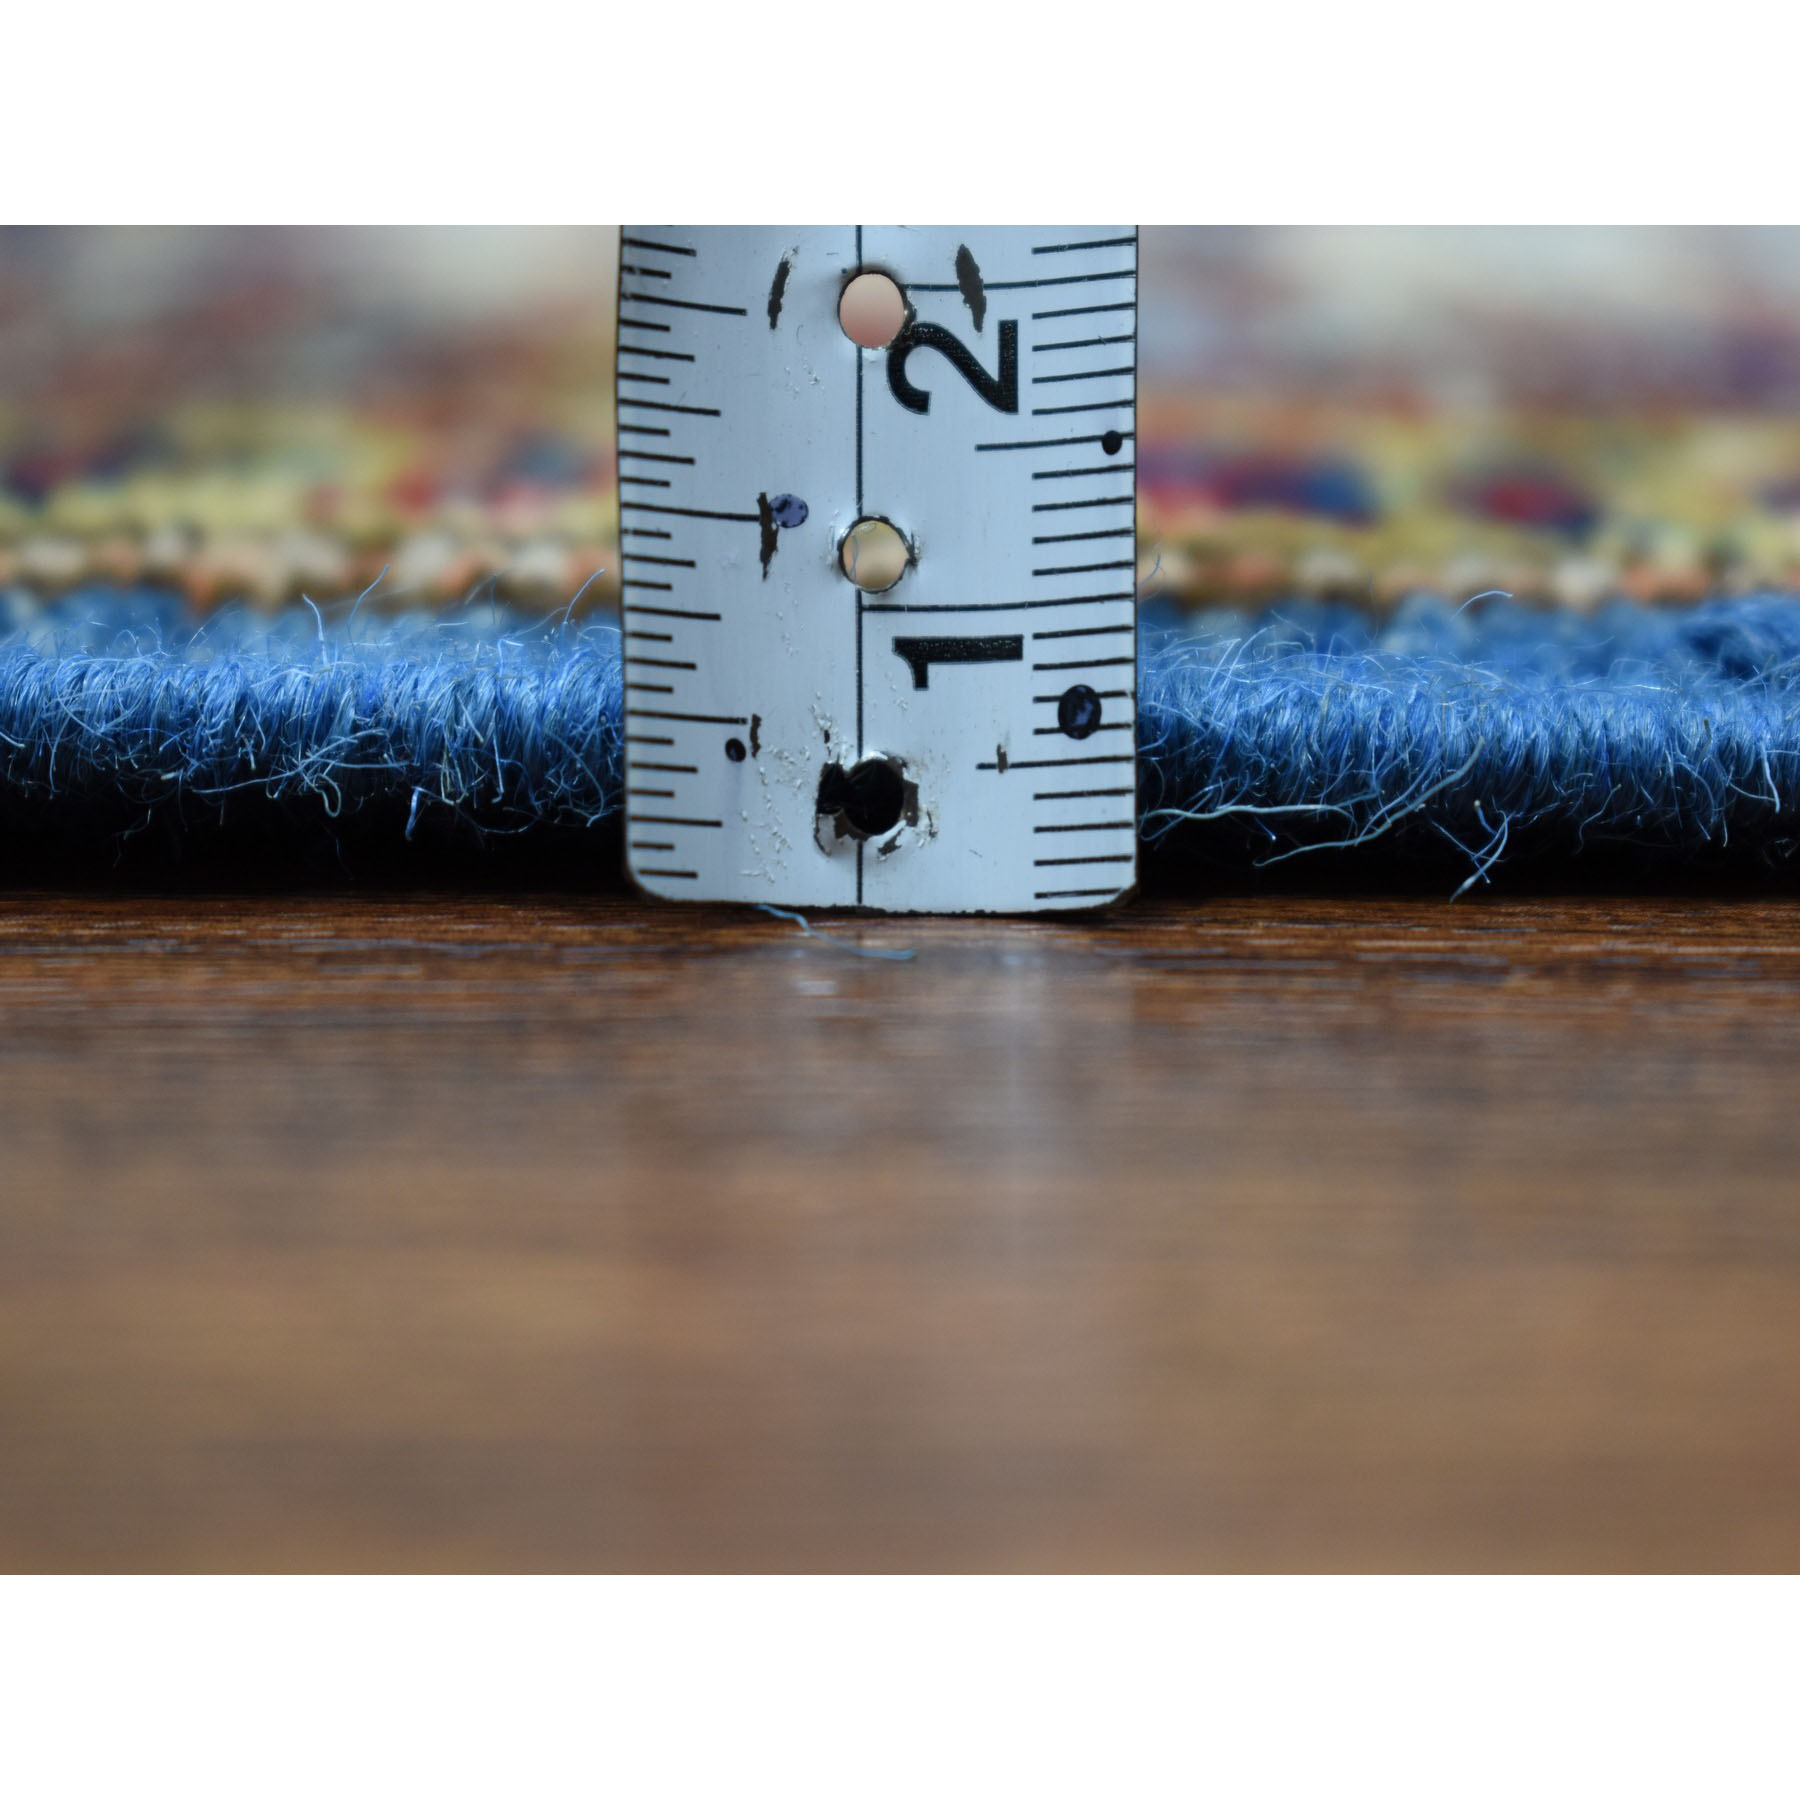 2-9 x4-2  Blue Super Kazak Pure Wool Geometric Design Hand-Knotted Oriental Rug 